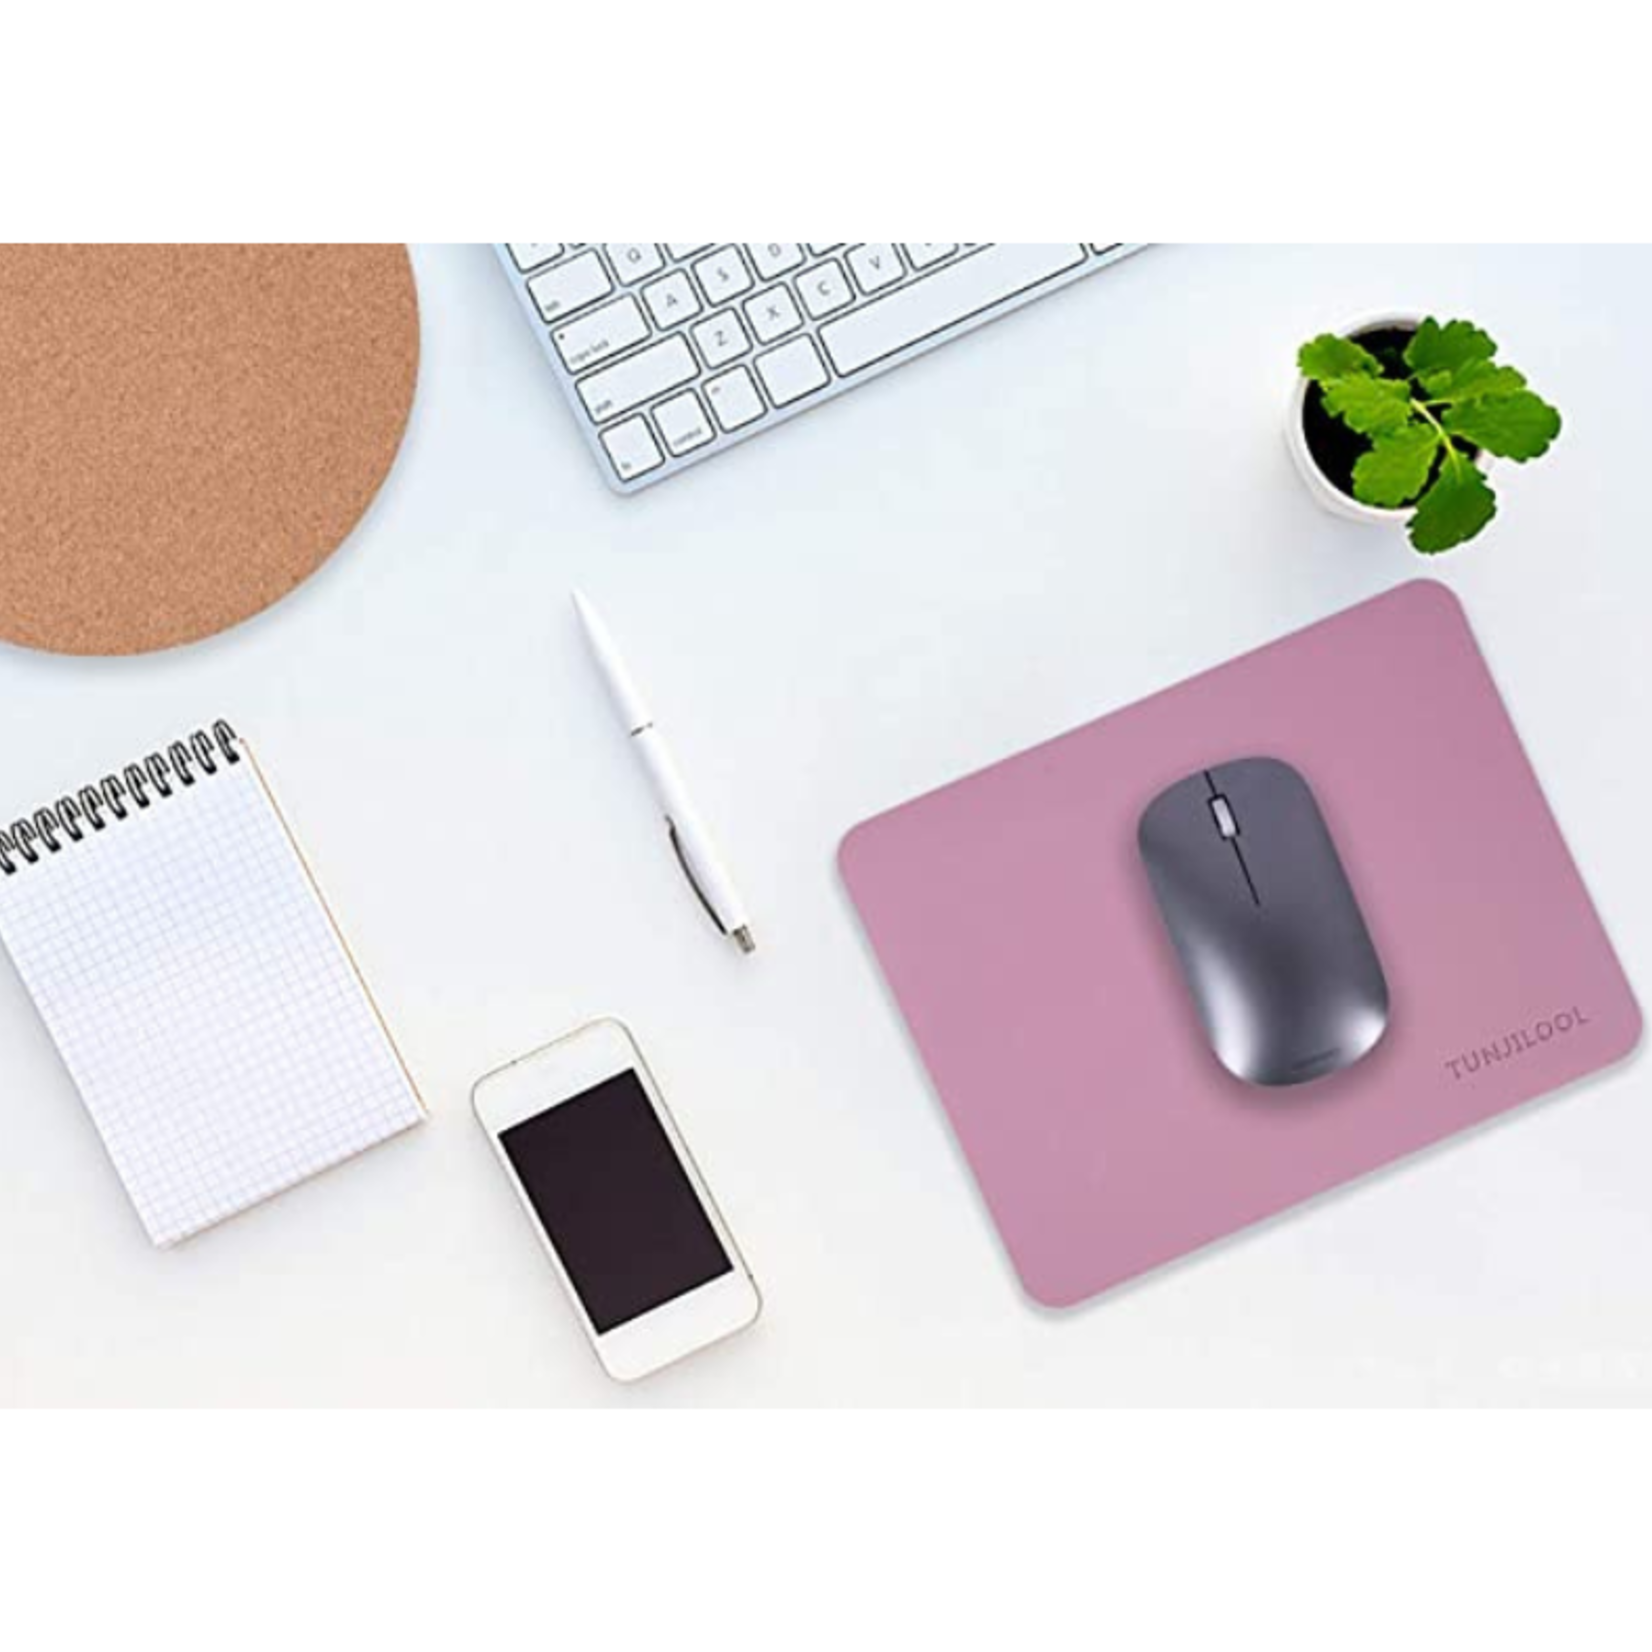 Tunjilool Leather Mouse Pad- Pink/Purple